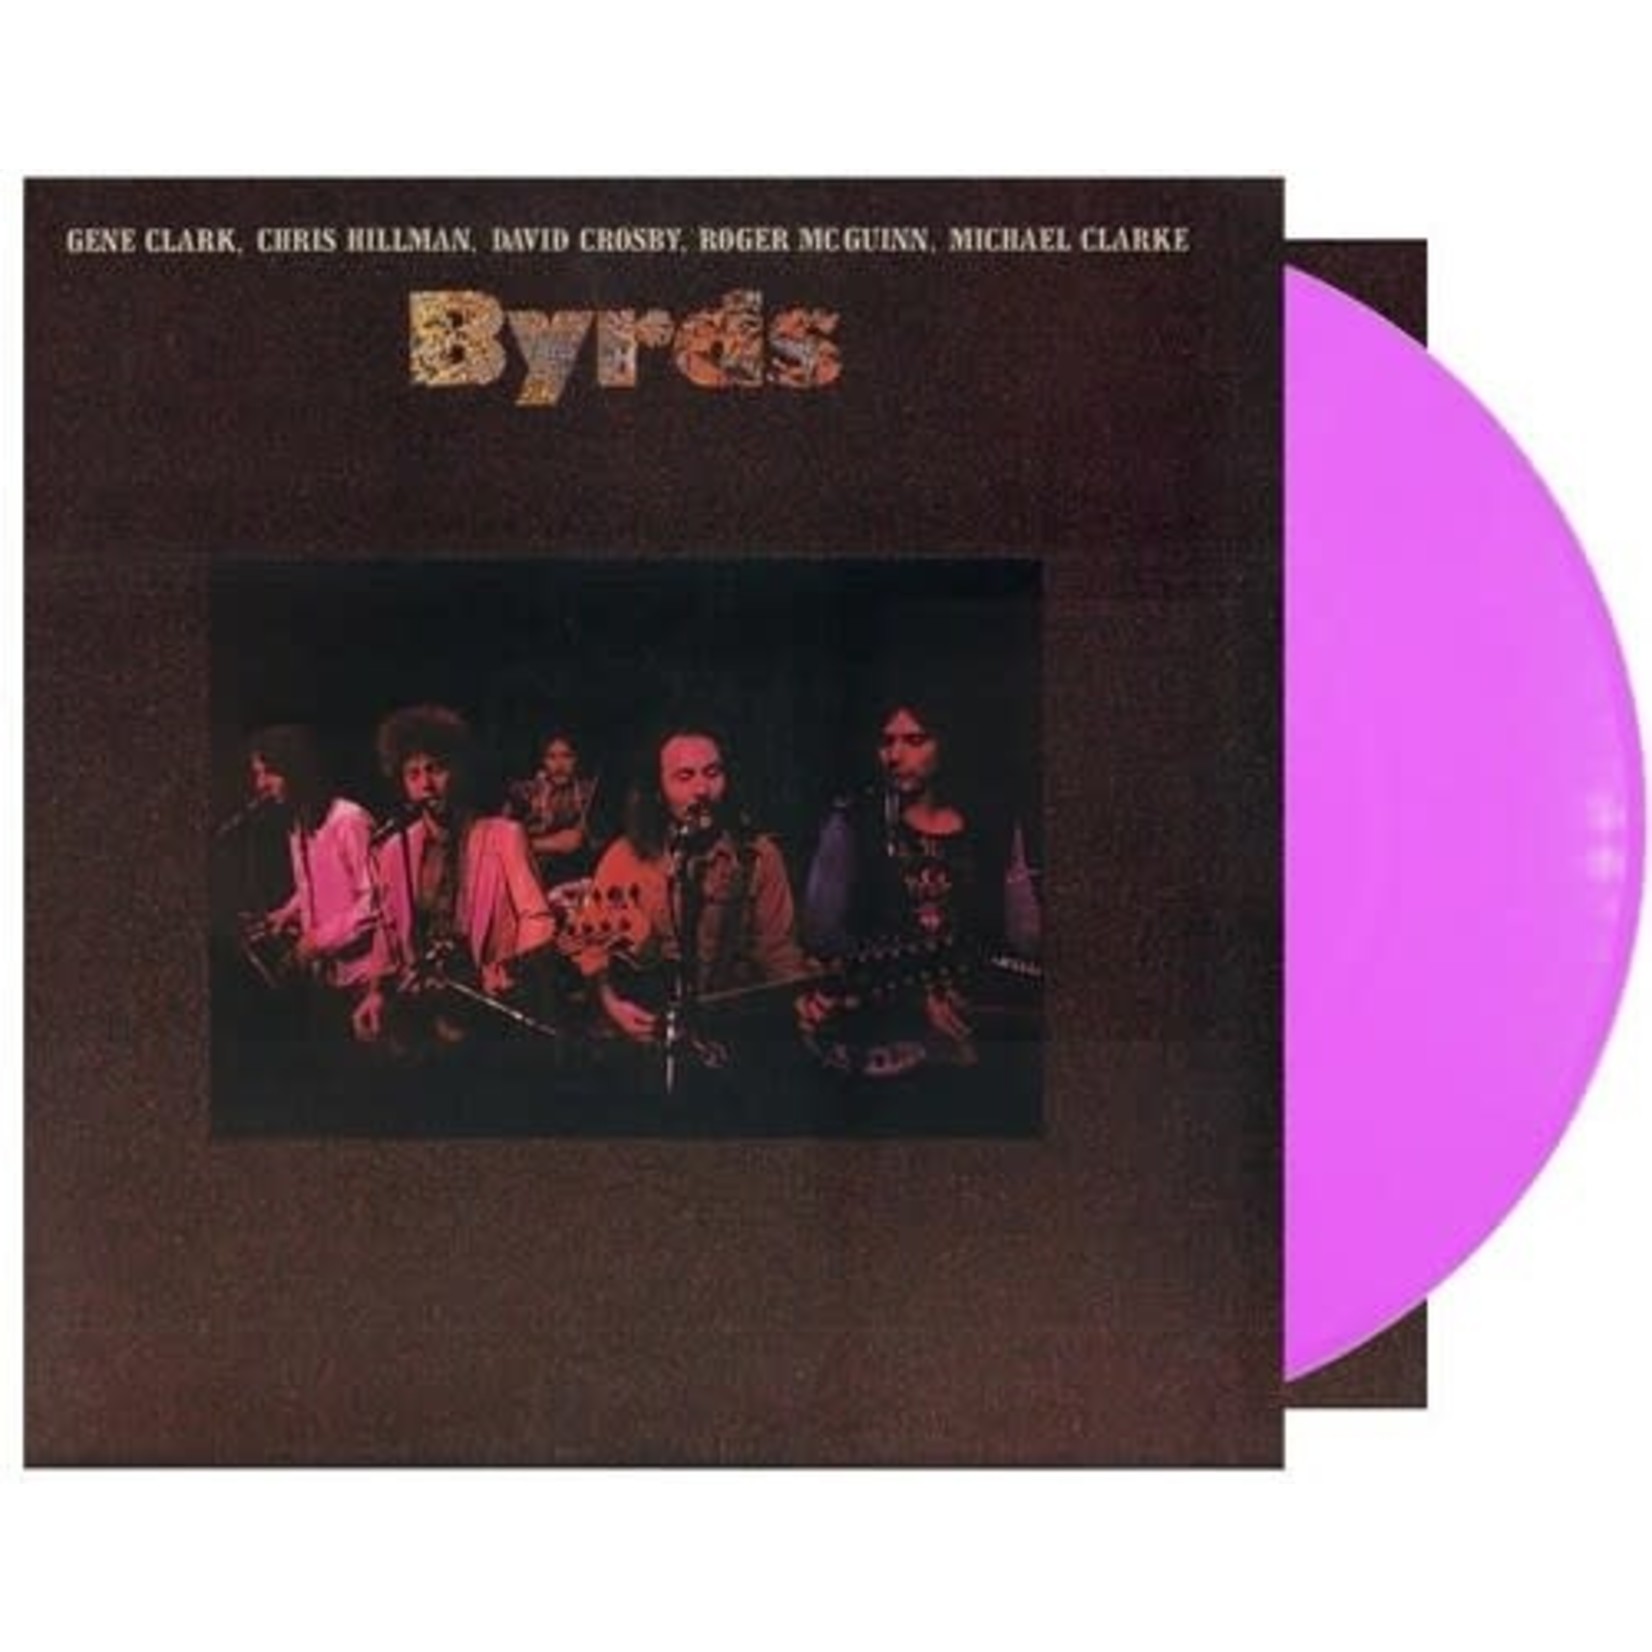 Friday Music Byrds - The Byrds (LP) [Violet]